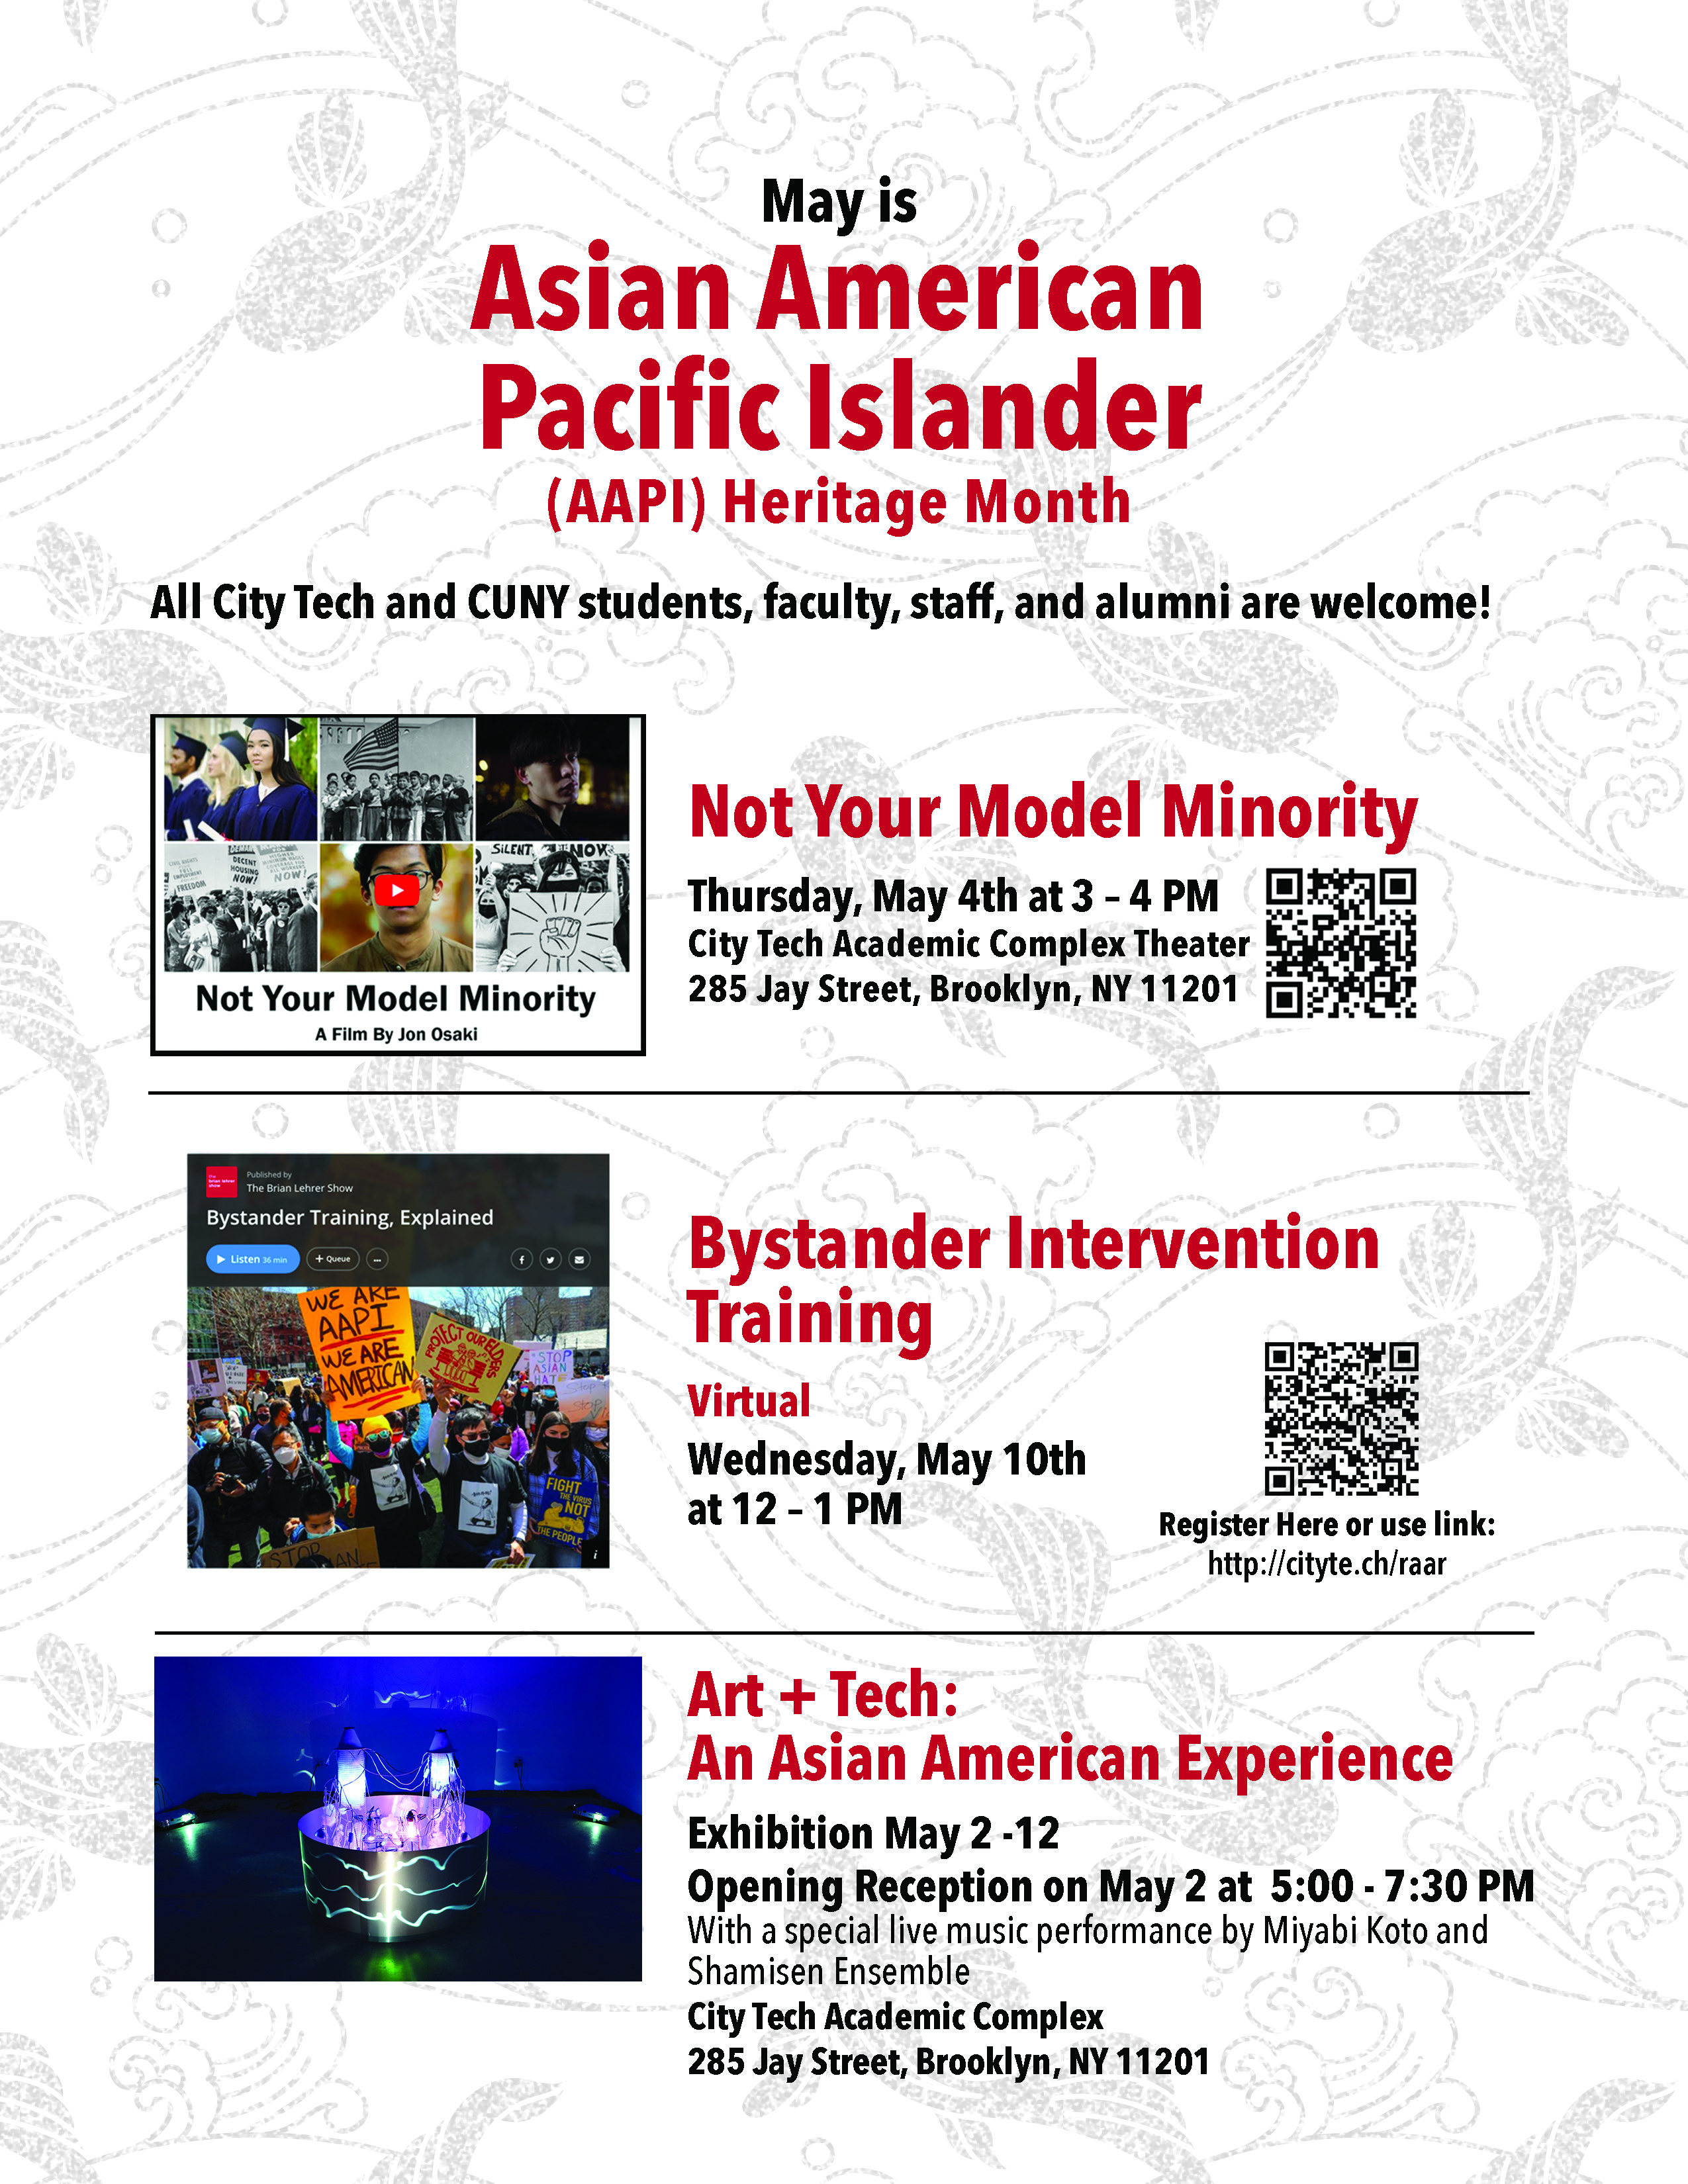 Asian American & Pacific Islander Event